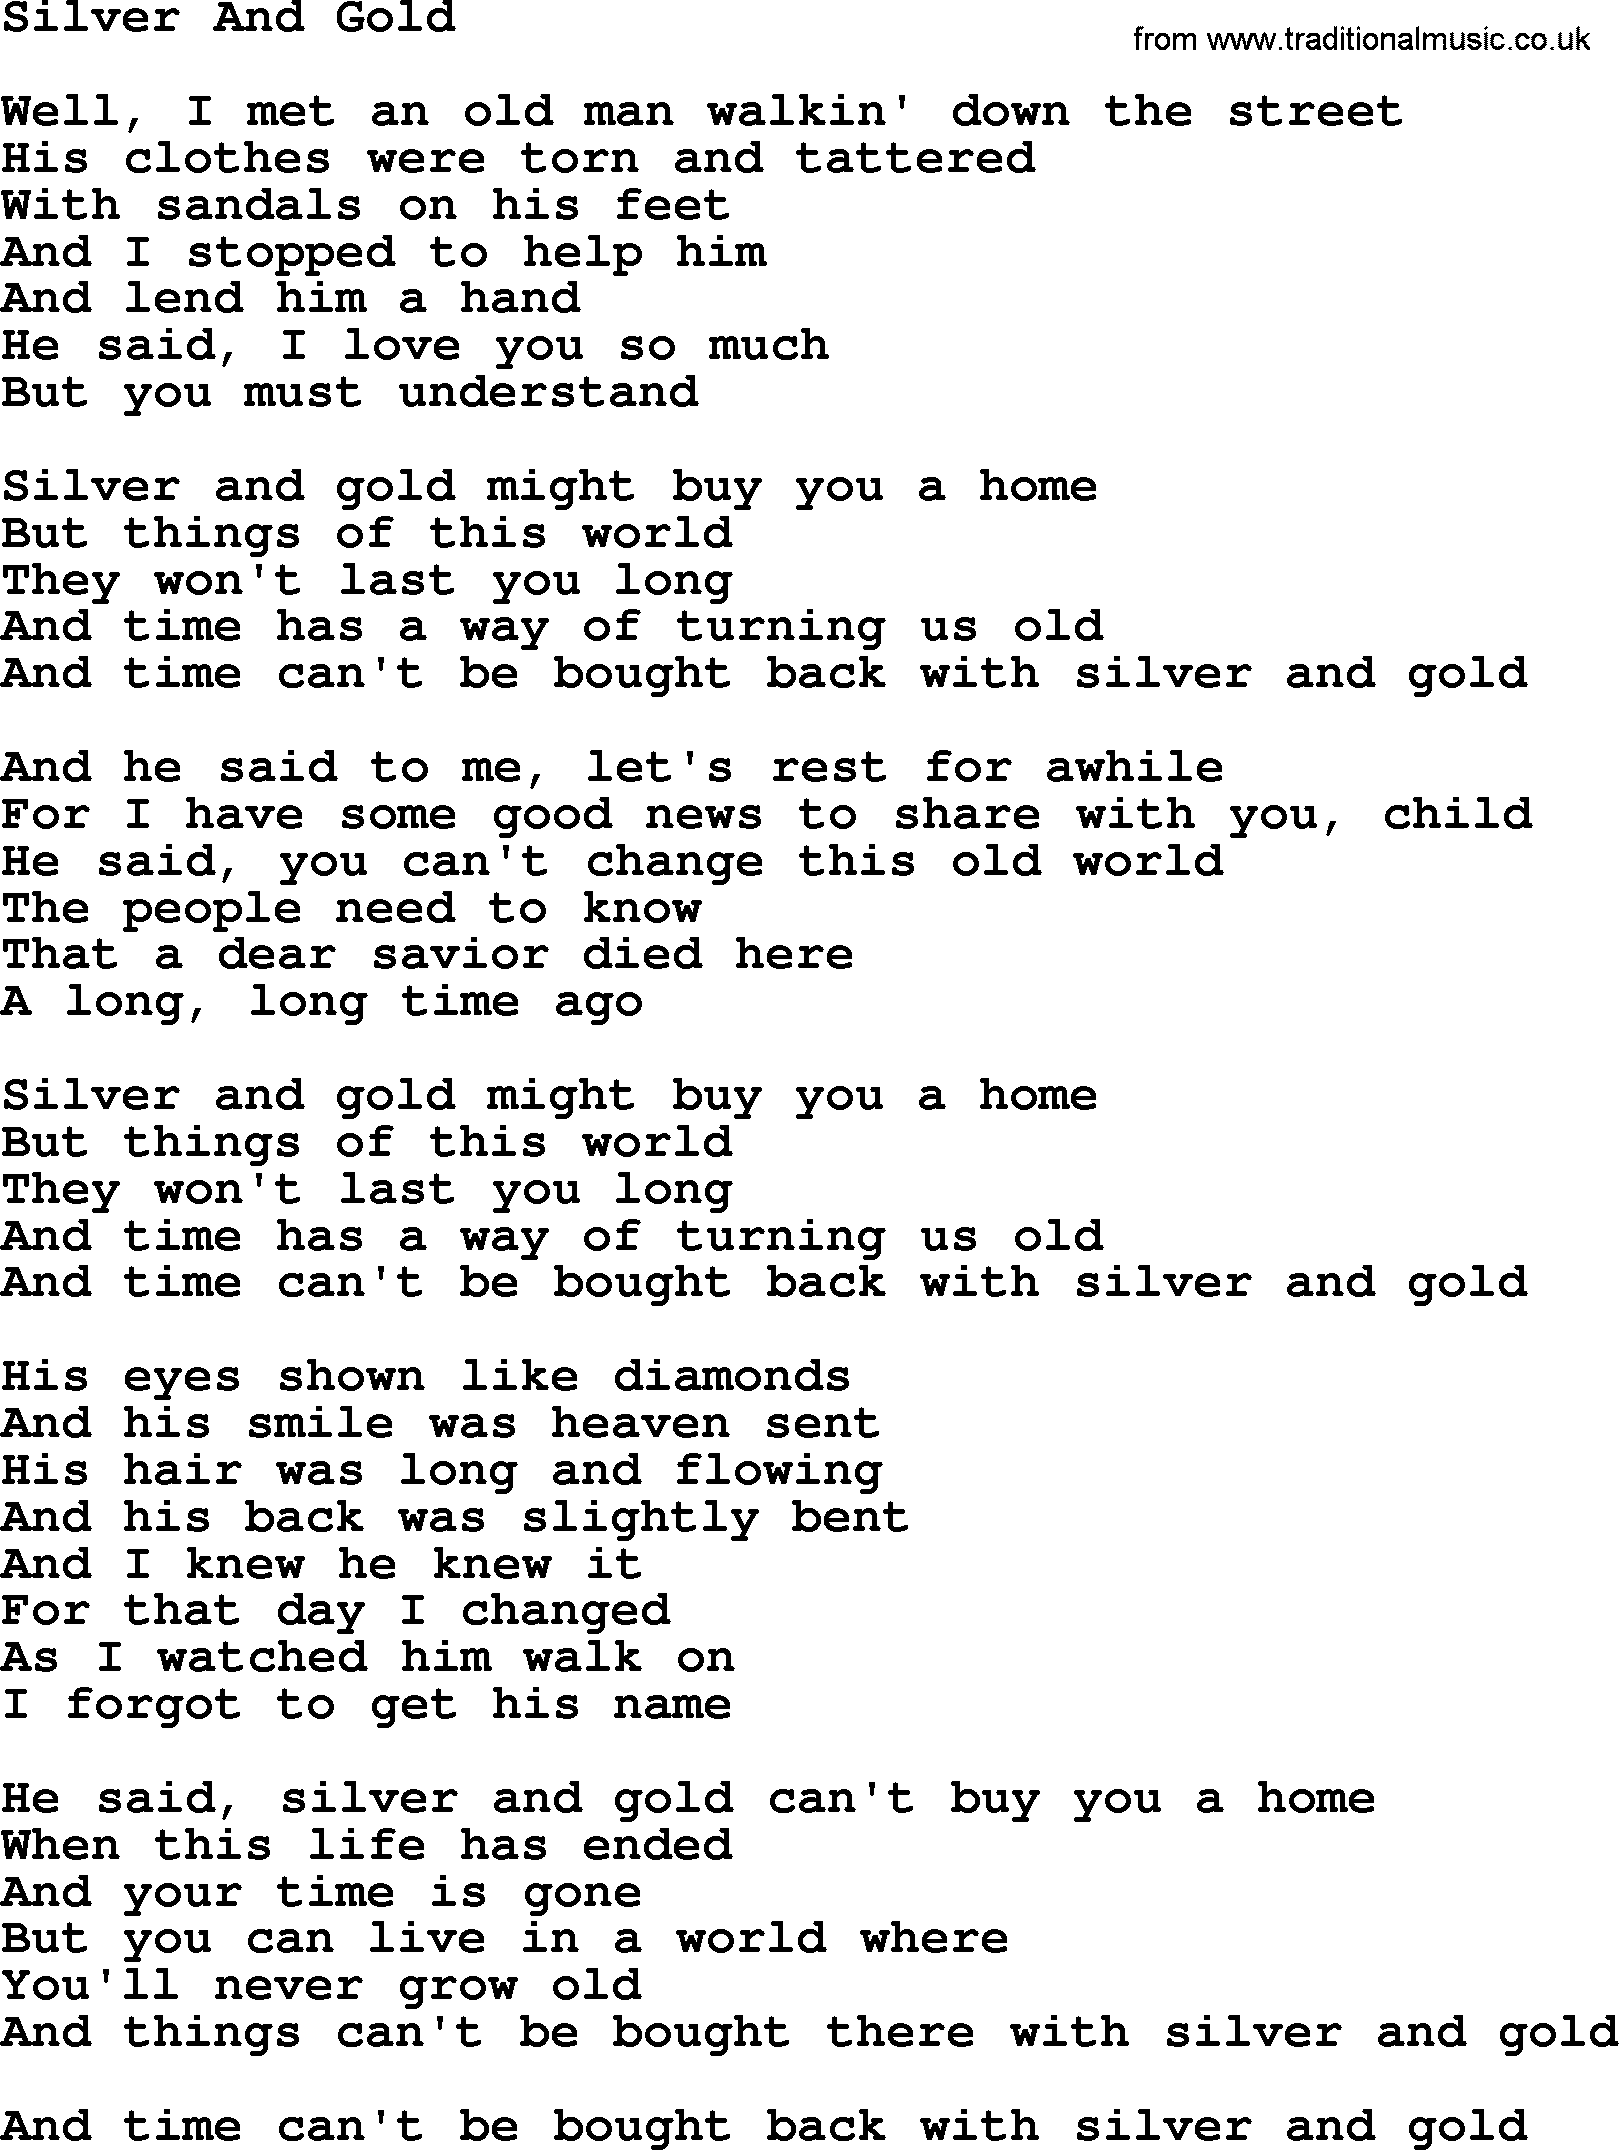 Dolly Parton song Silver And Gold.txt lyrics